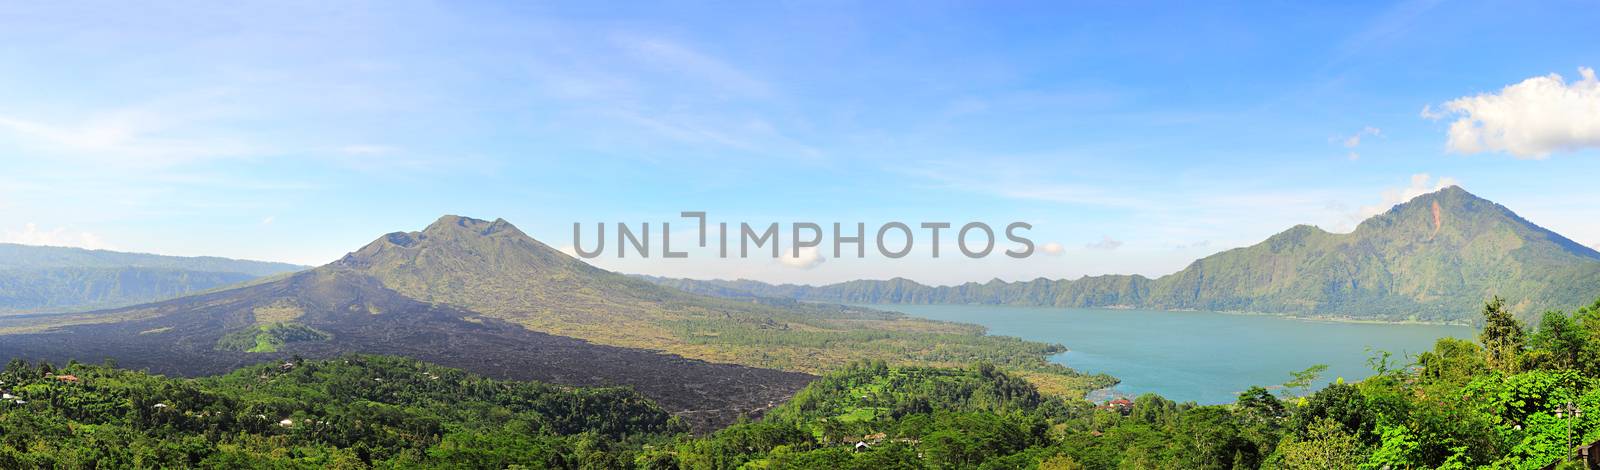 Batur volcano by joyfull